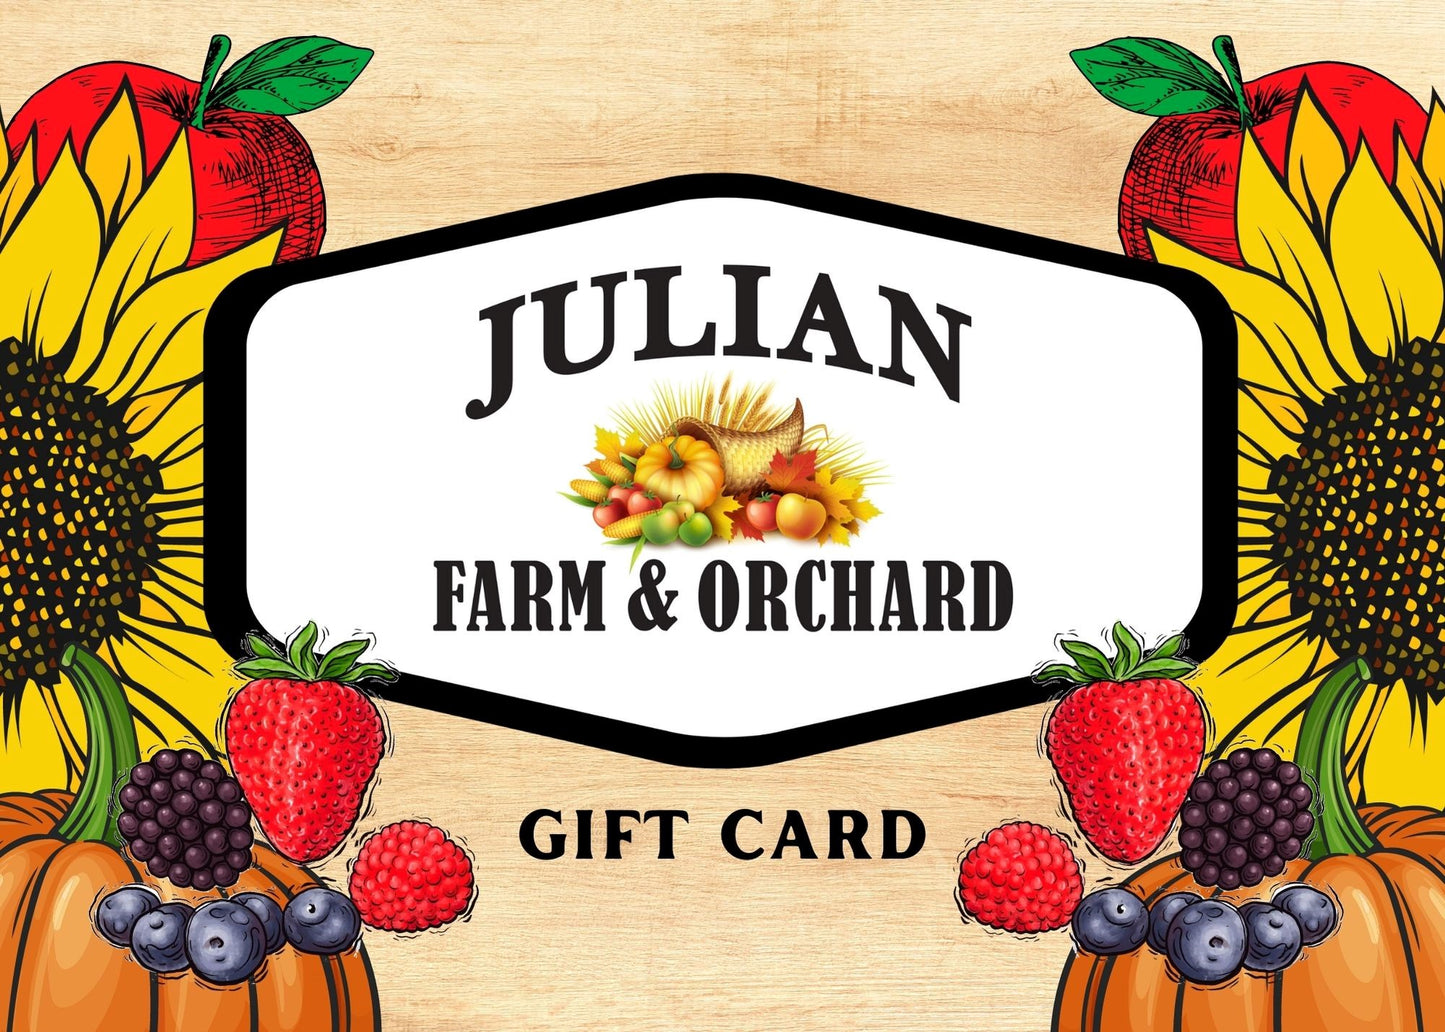 Julian Farm and Orchard Gift Card